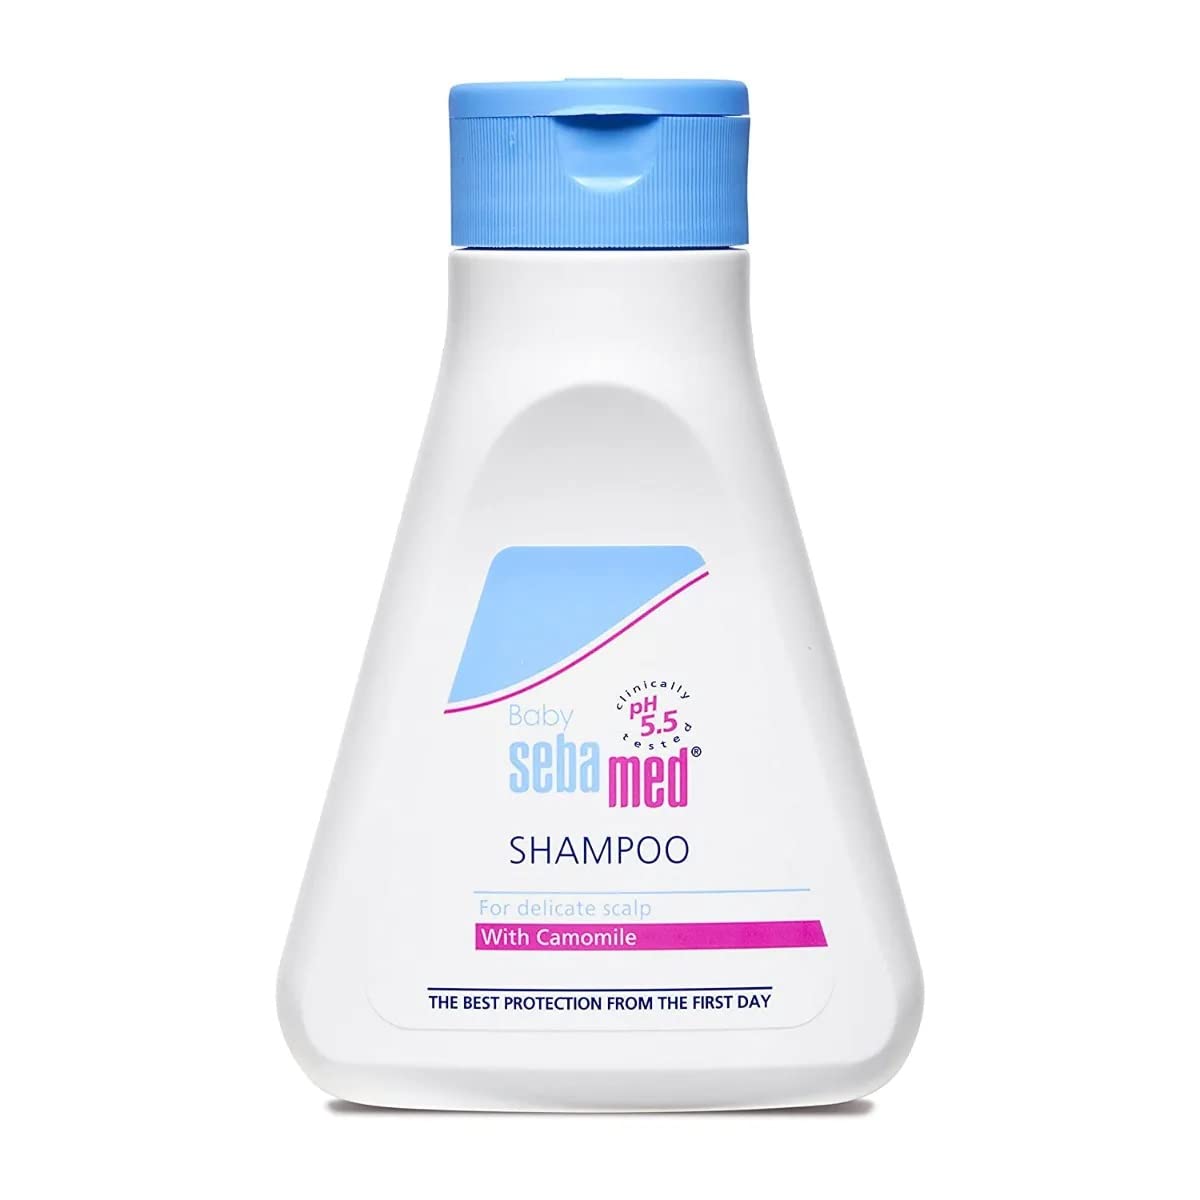 Sebamed Baby Shampoo 50ml| Ph 5.5| Camomile|Natural moisturisers|No tears formula|For delicate scalp